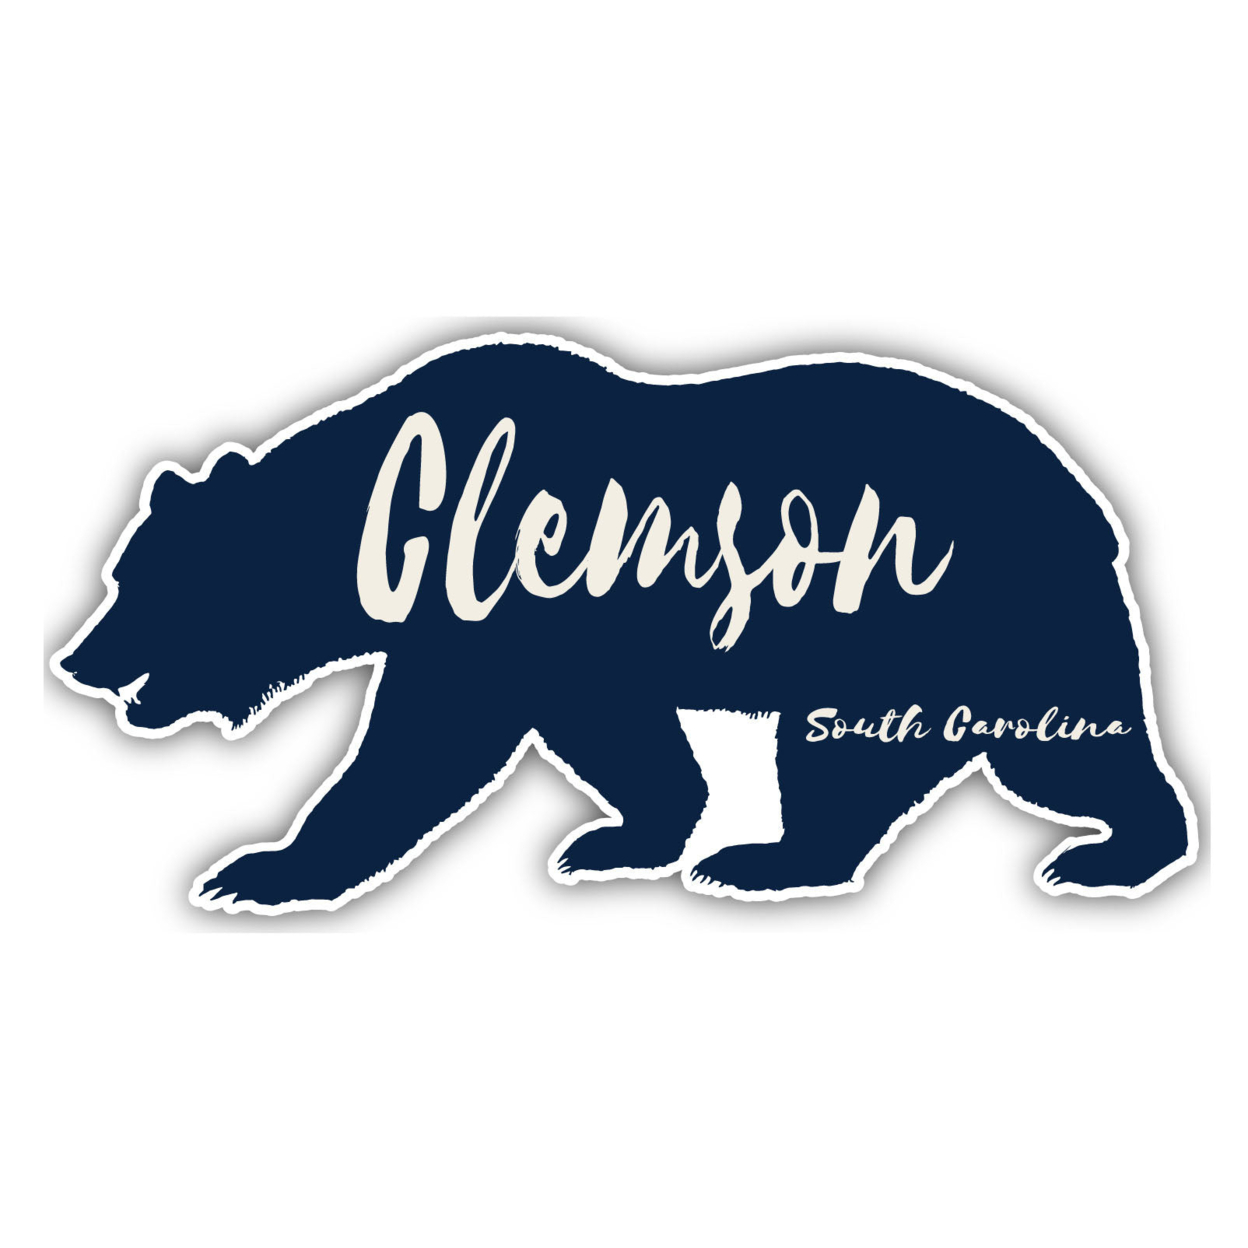 Clemson South Carolina Souvenir Decorative Stickers (Choose Theme And Size) - Single Unit, 4-Inch, Camp Life